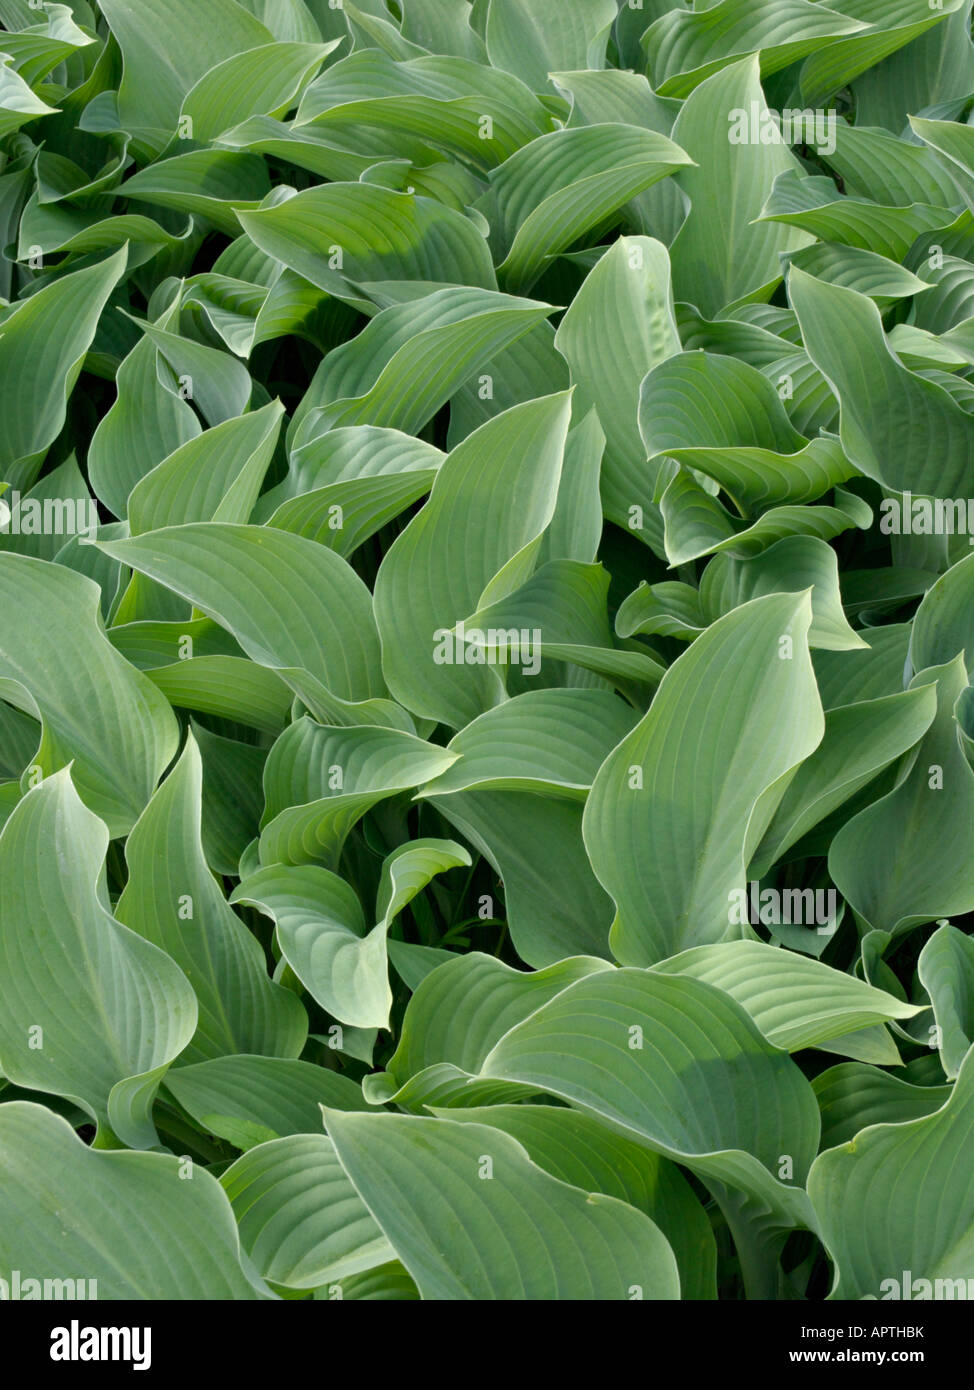 Plantain lily (Hosta nigrescens 'Krossa Regal') Stock Photo